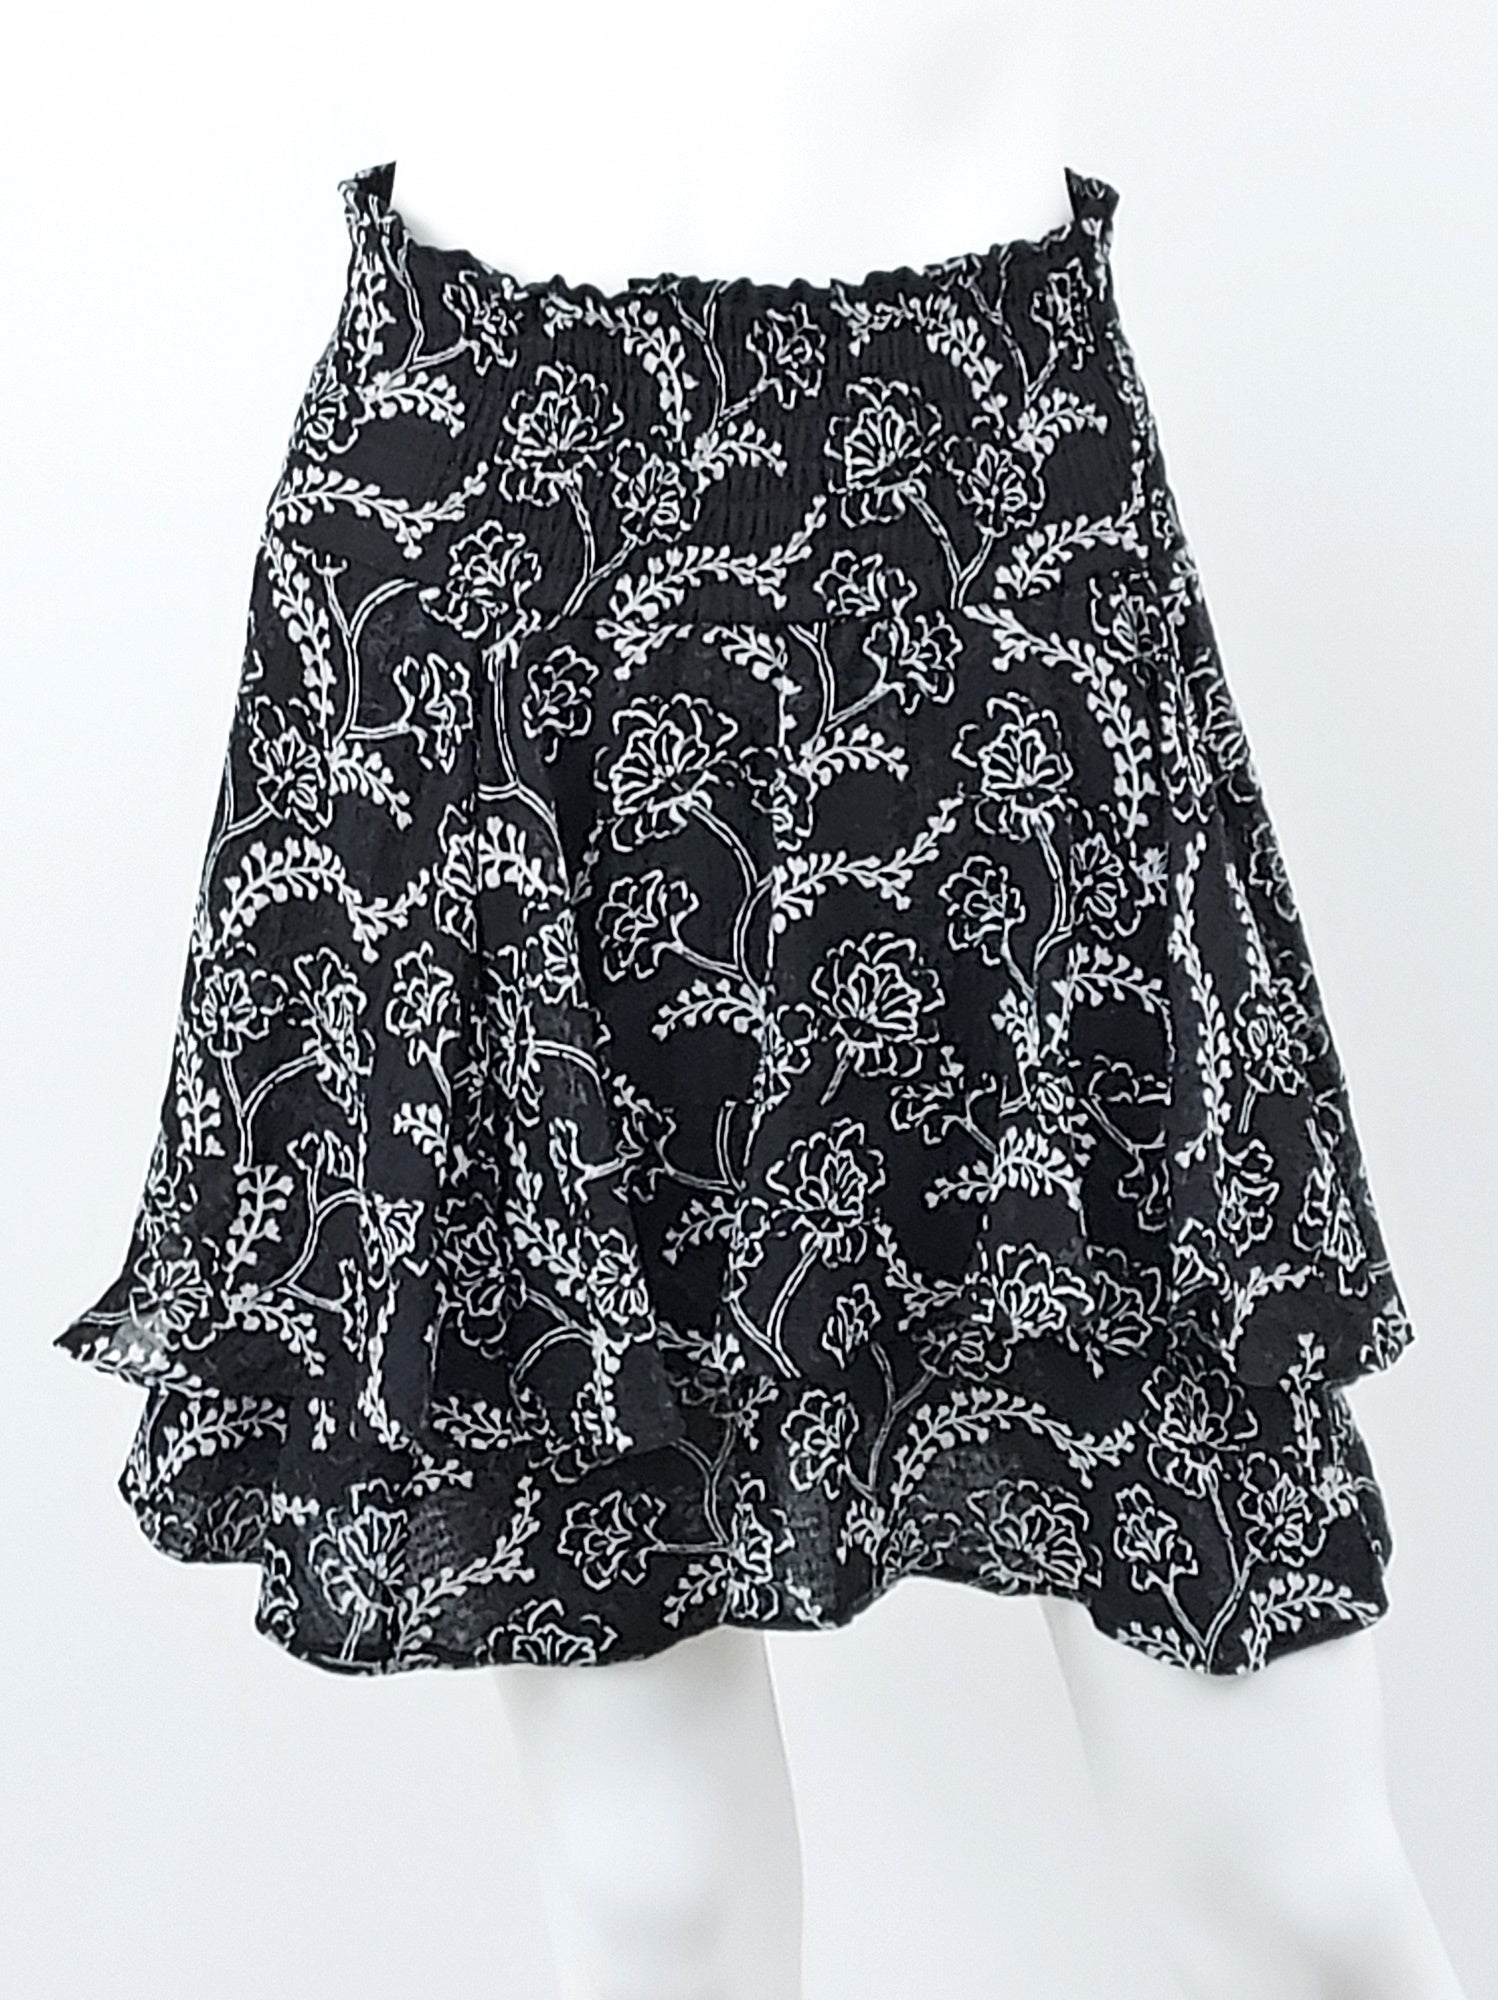 Vera Ruffle Mini Skirt Size 2